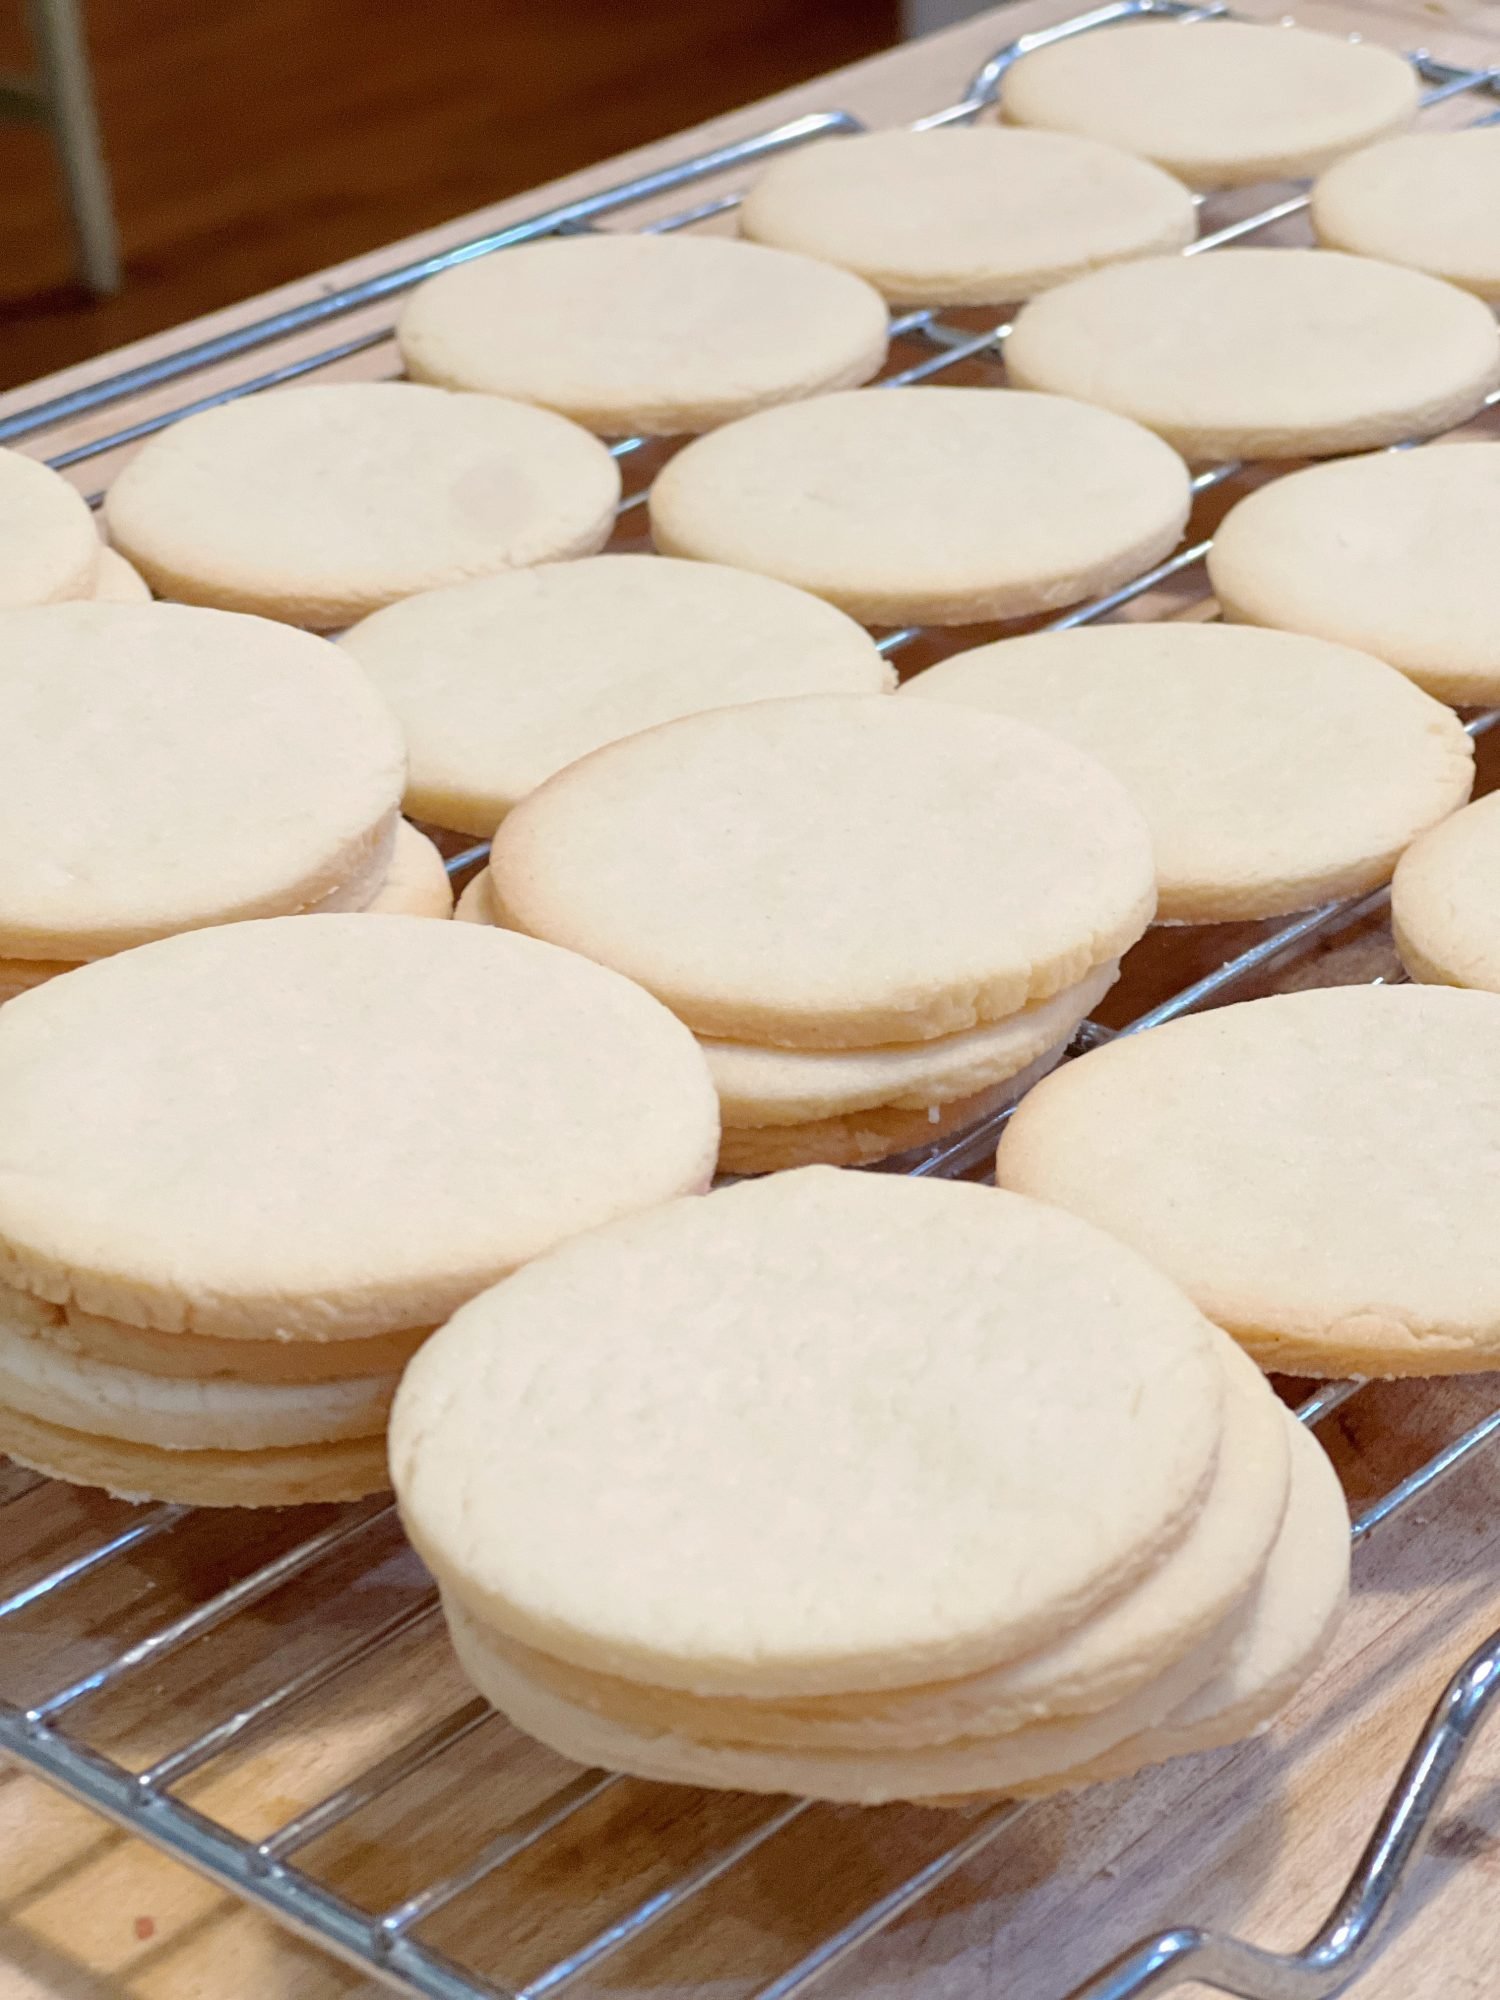 Steps to Bake Pretty Fall Cookies